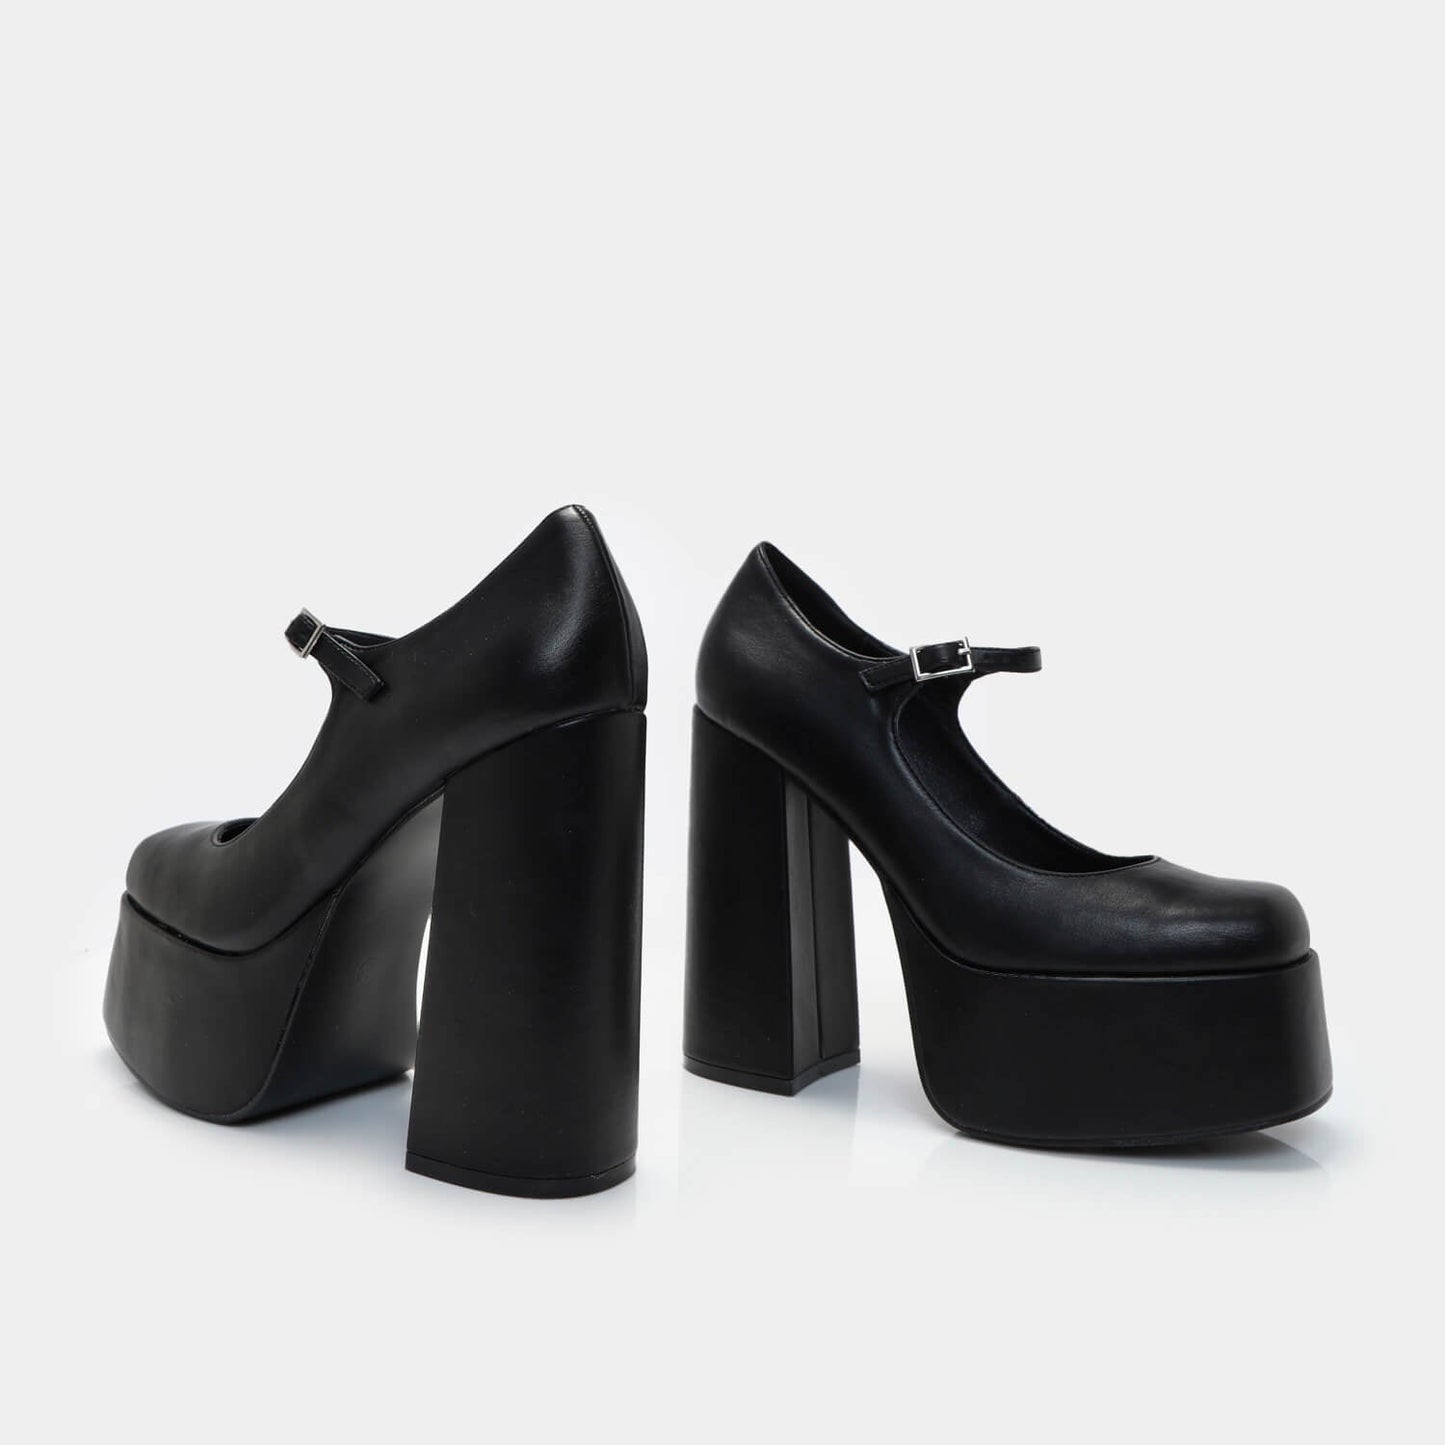 Darkbloom Black Platform Heels - Shoes - KOI Footwear - Black - Side and Back View